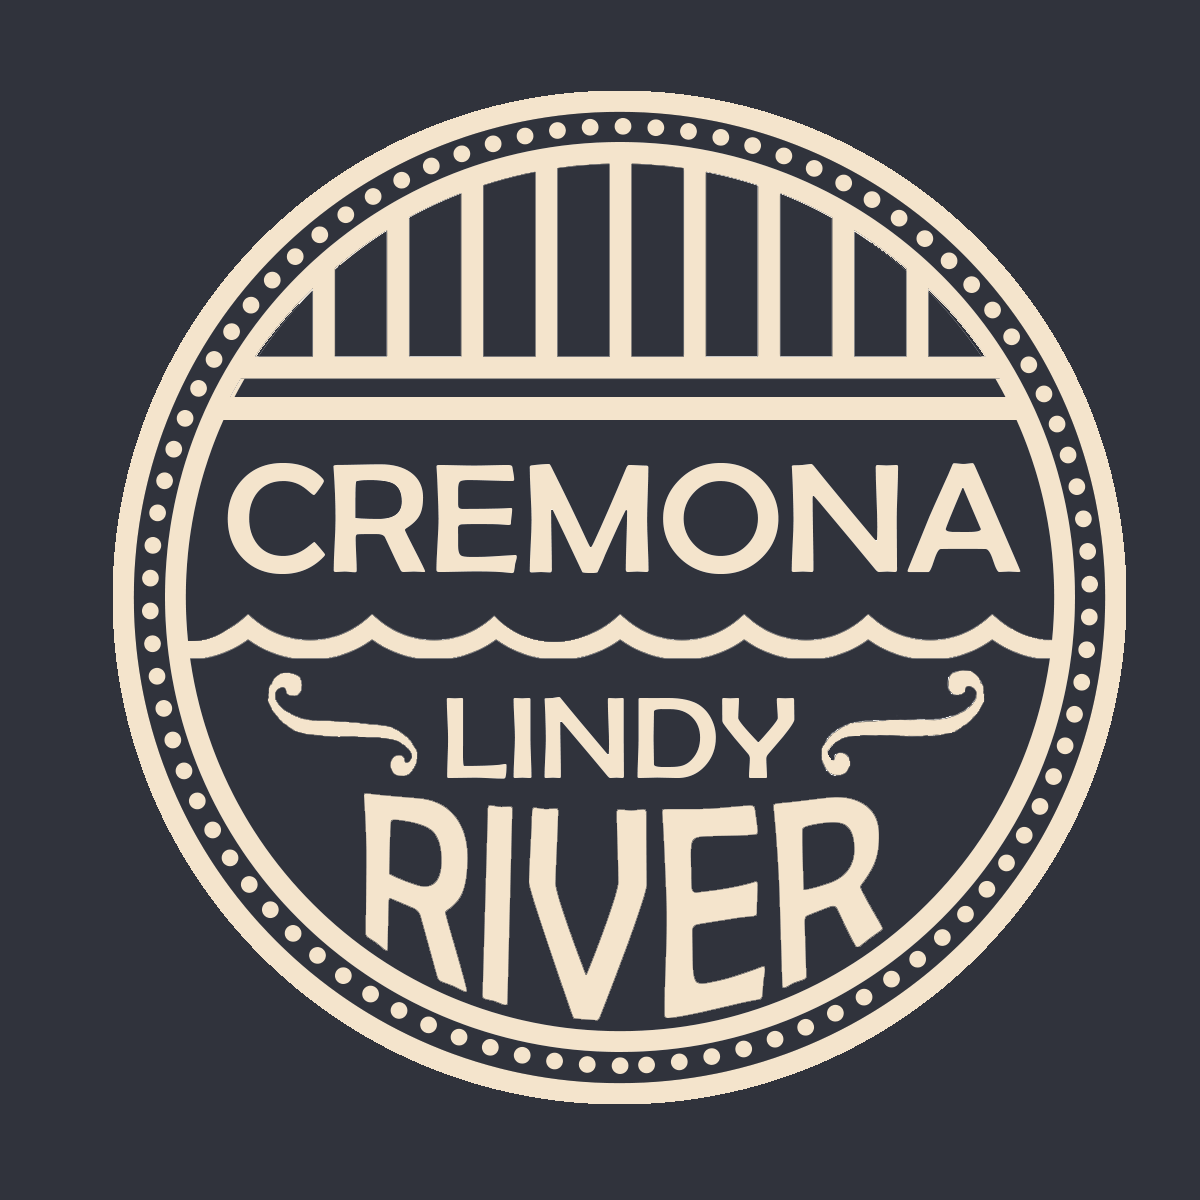 Cremona Lindy River